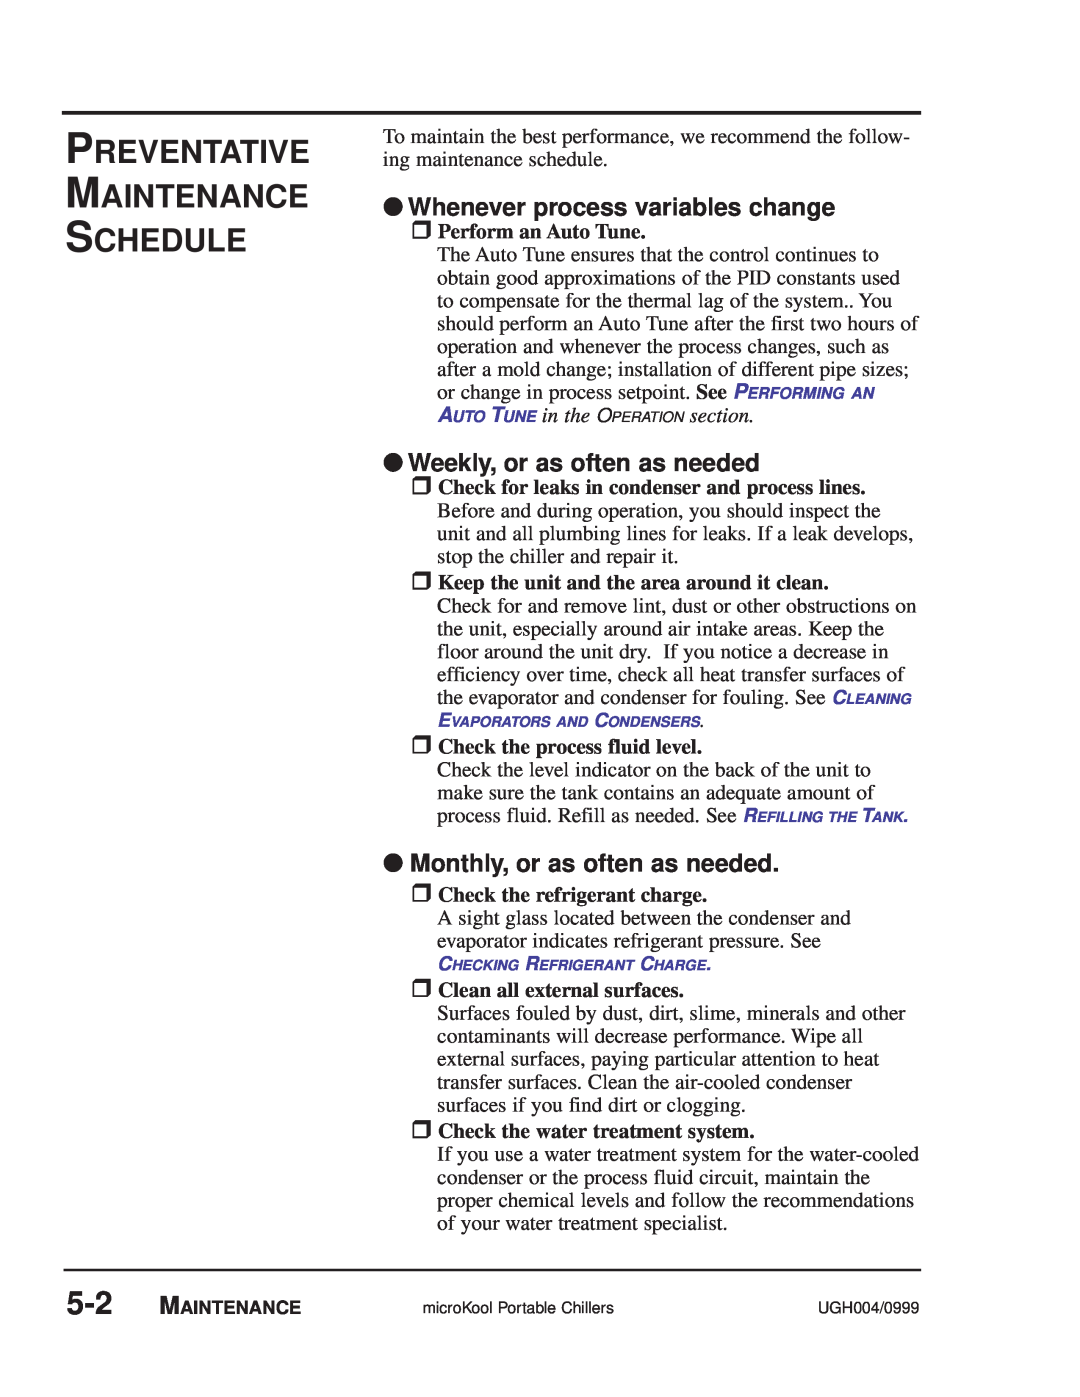 Conair MPA, MPW manual Preventative Maintenance Schedule 